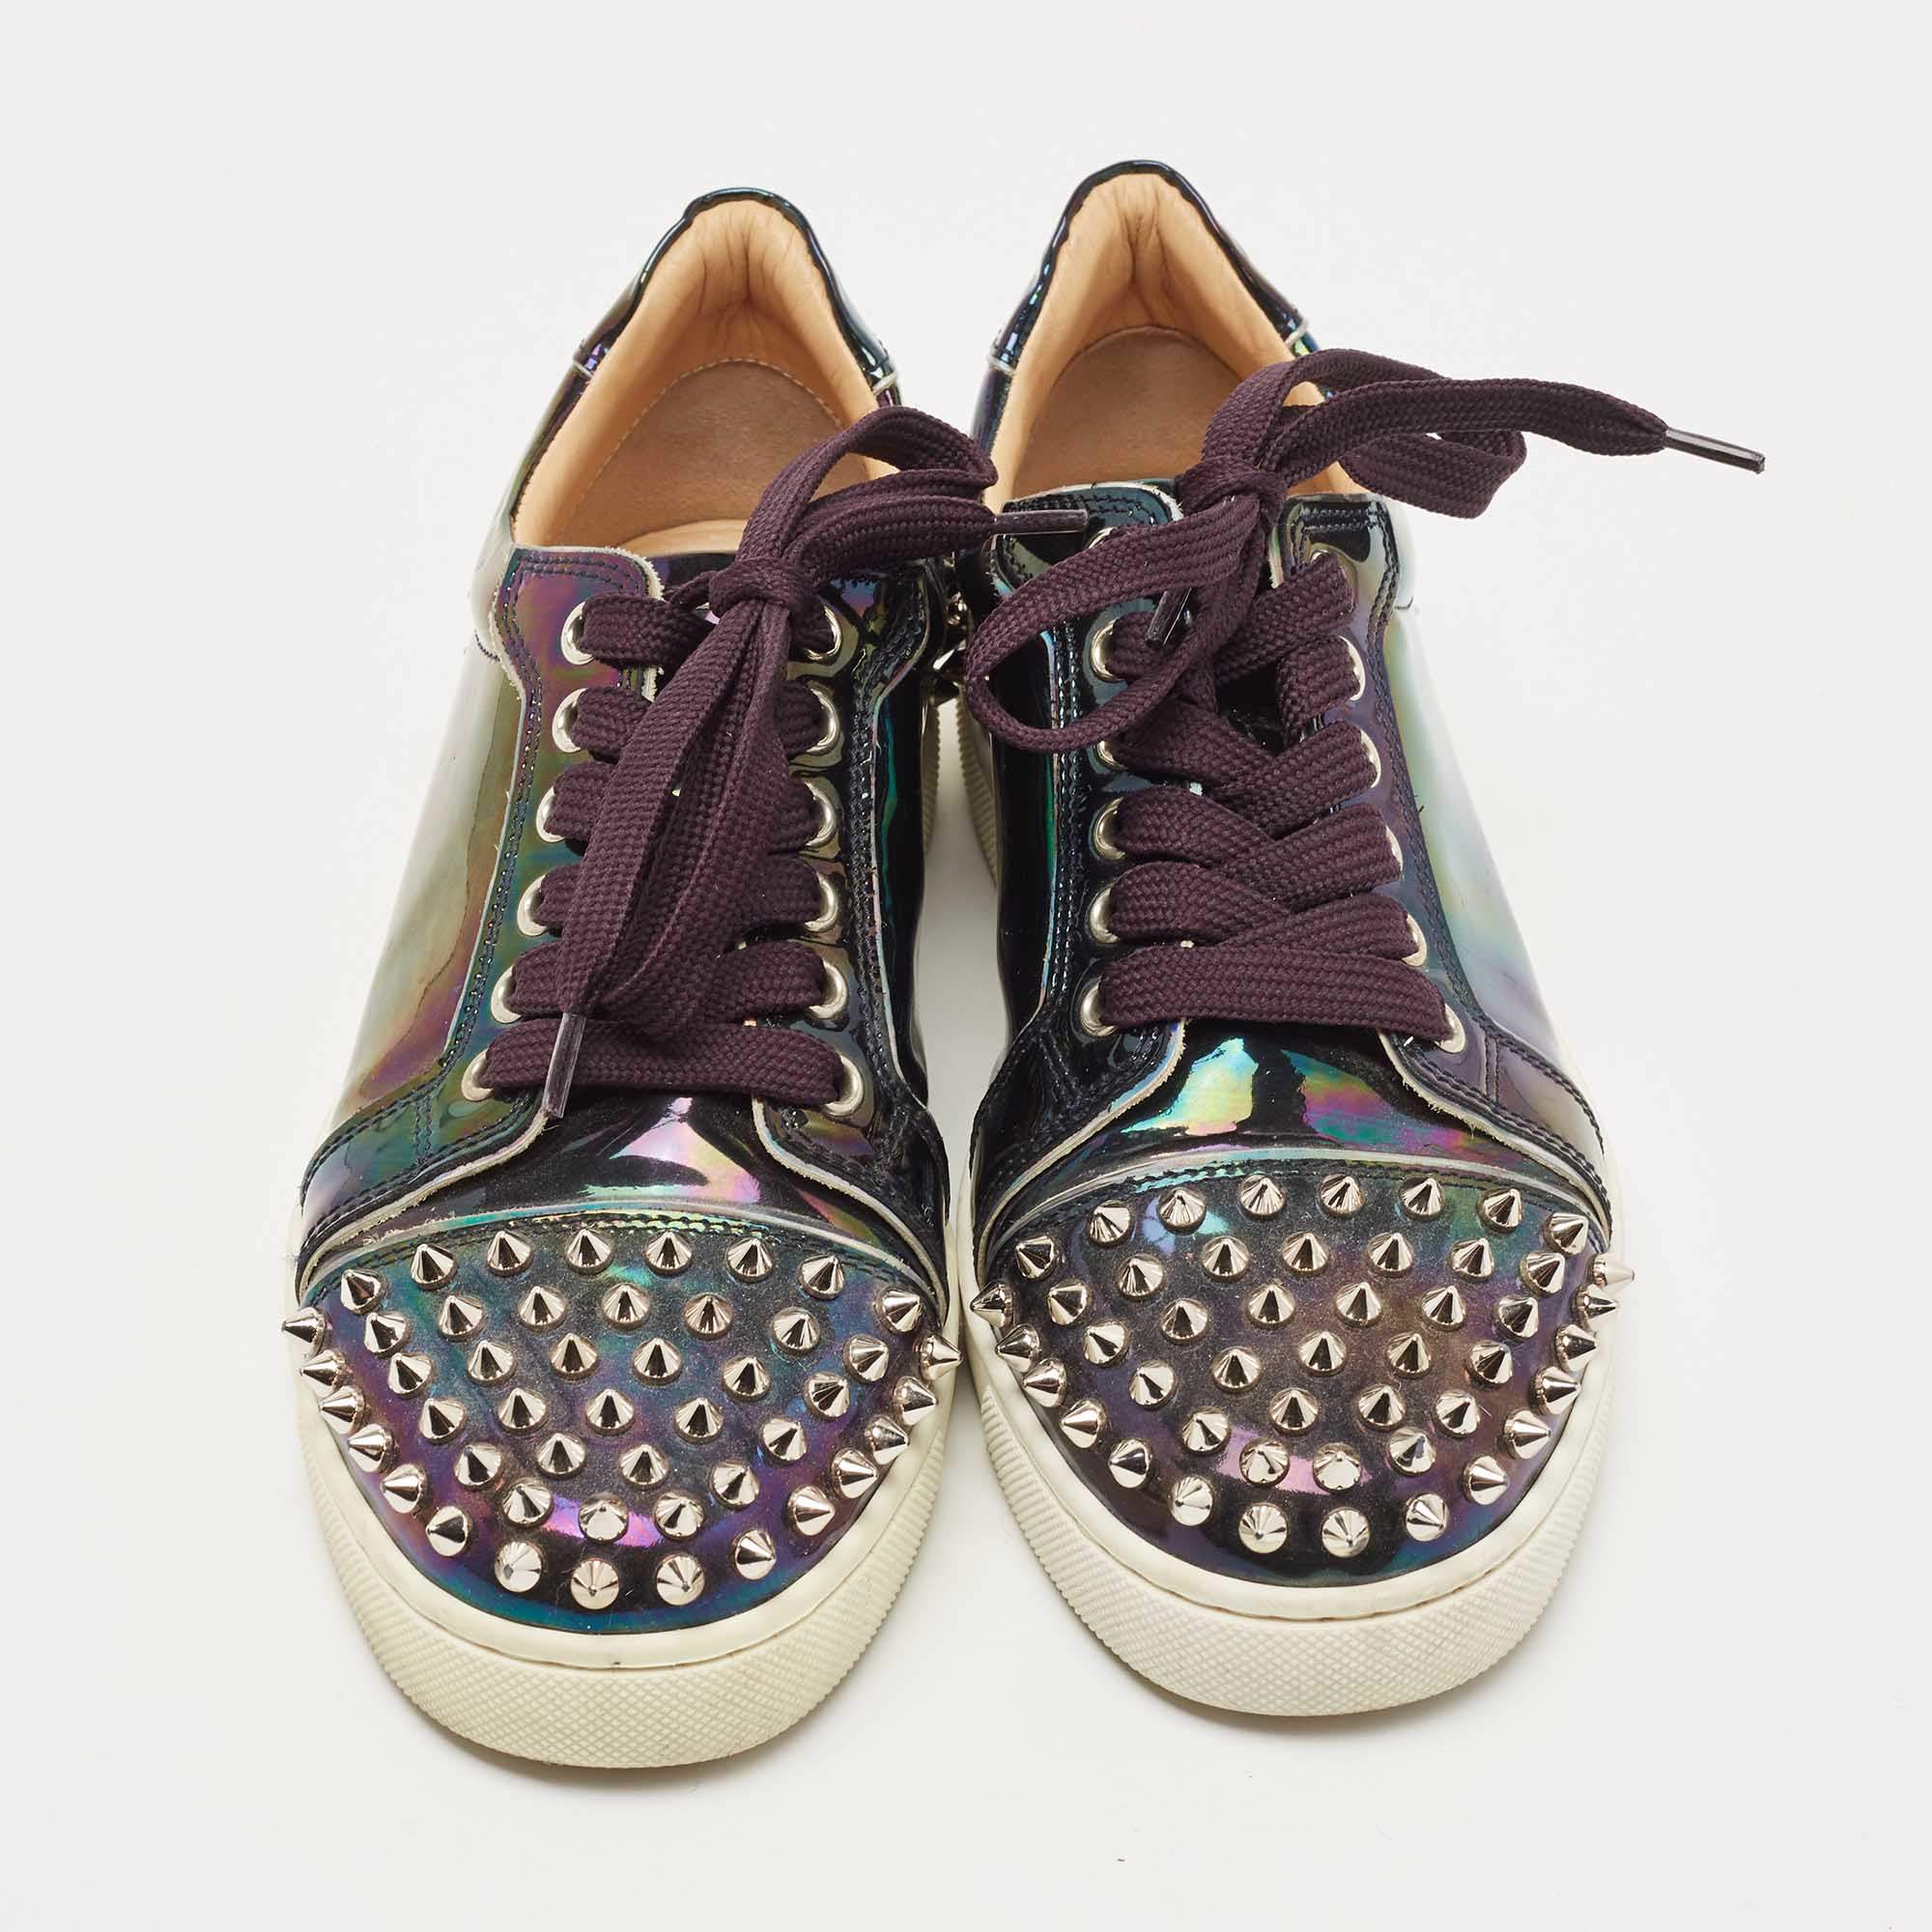 Christian Louboutin Aurelian Holographic Glitter Sneakers